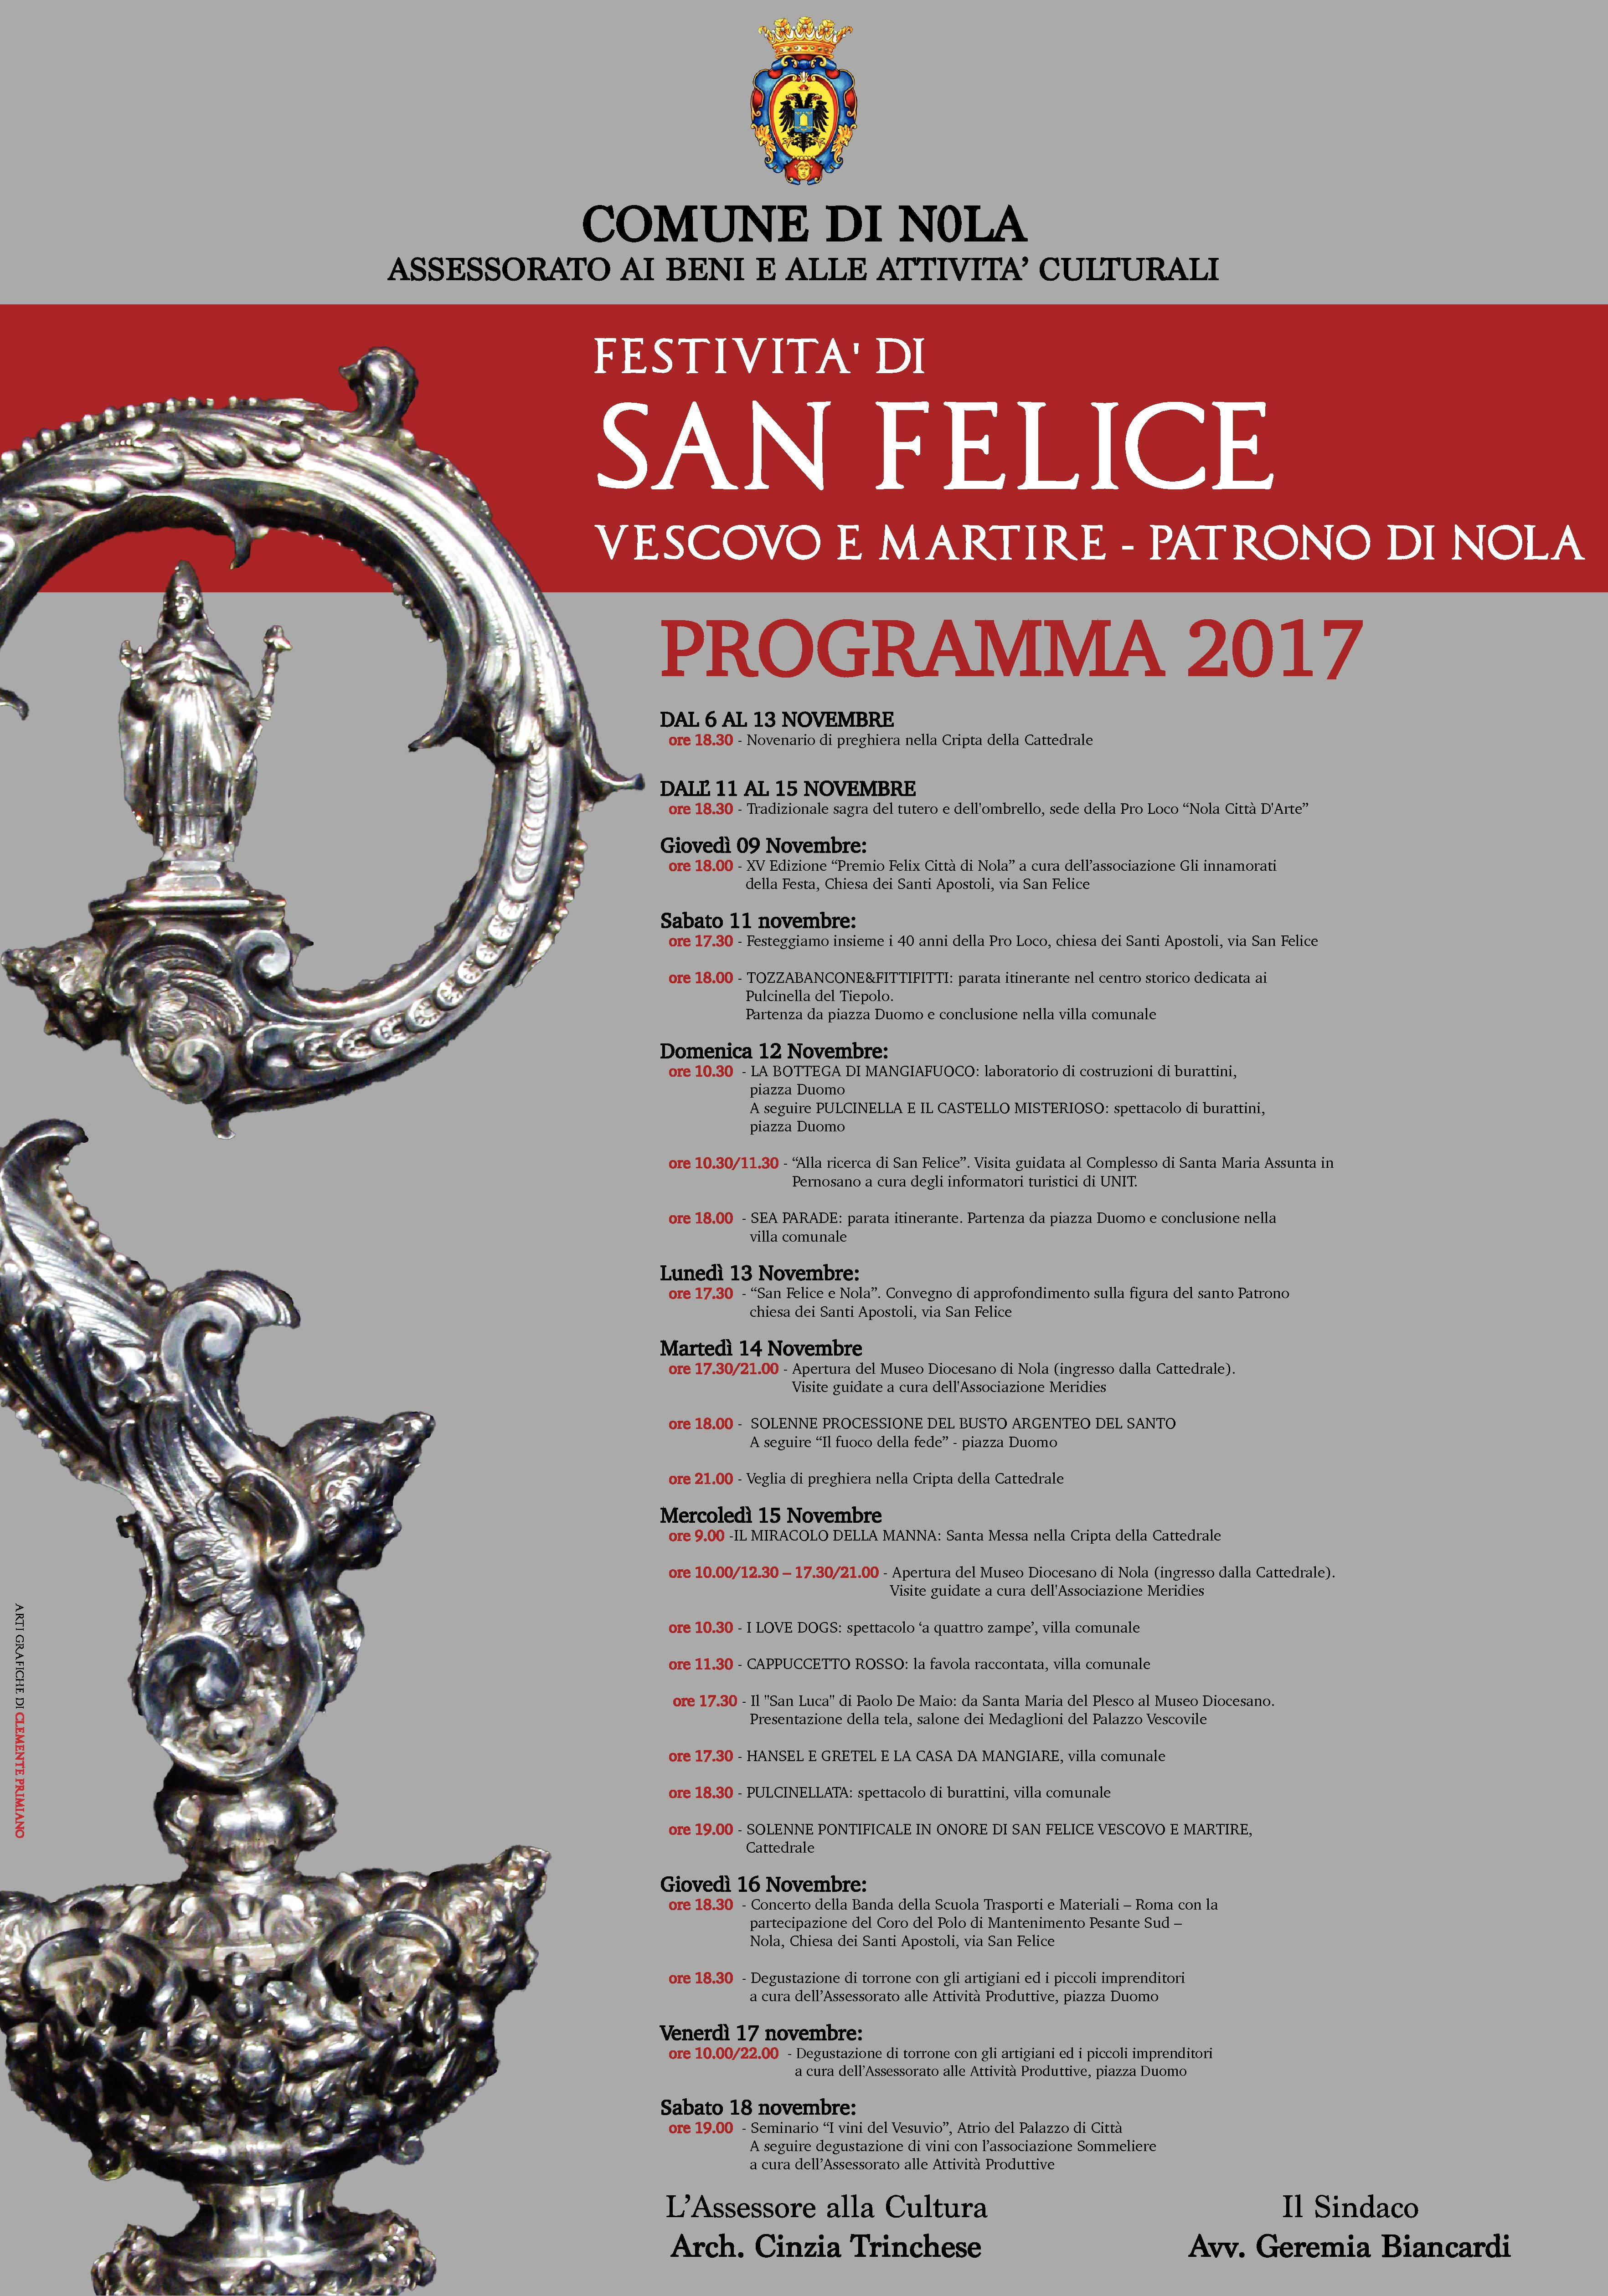 https://www.zerottounonews.it/wp-content/uploads/2017/11/Manifesto-programma-di-San-Felice-pdf-1.jpg